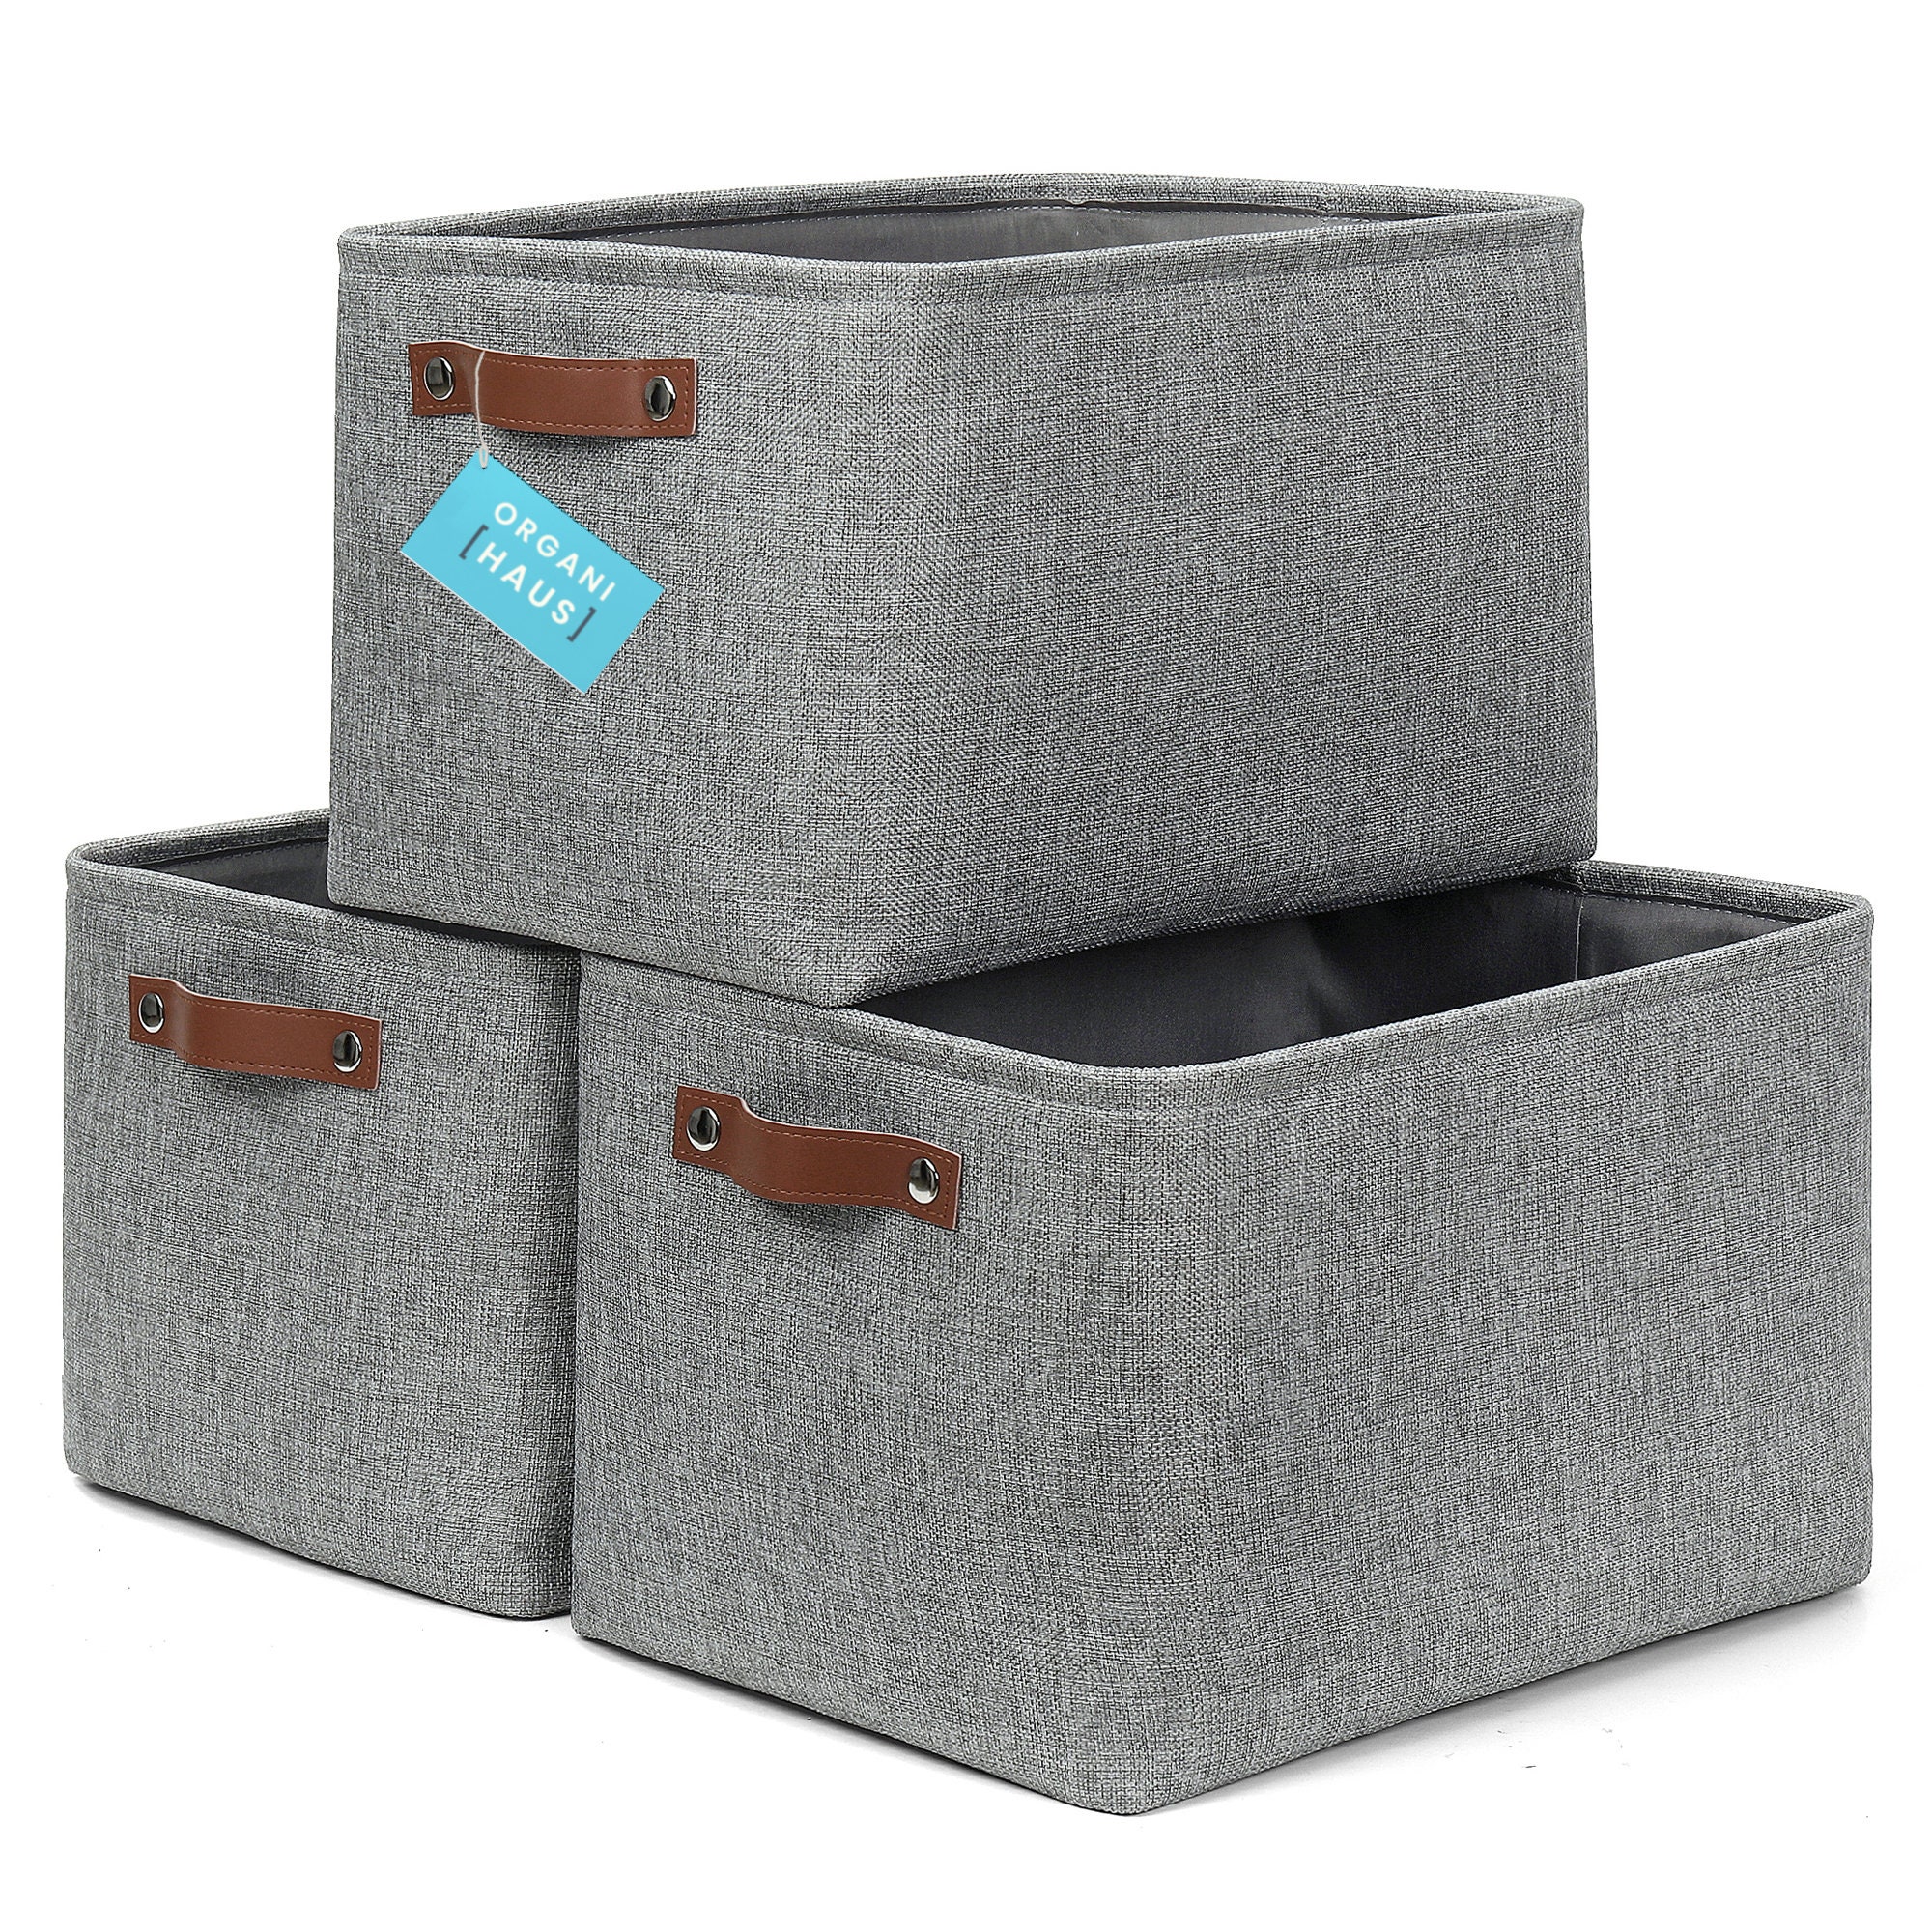 RIHUD Storage Baskets for Shelves 18.5x10.5x8in Closet Storage